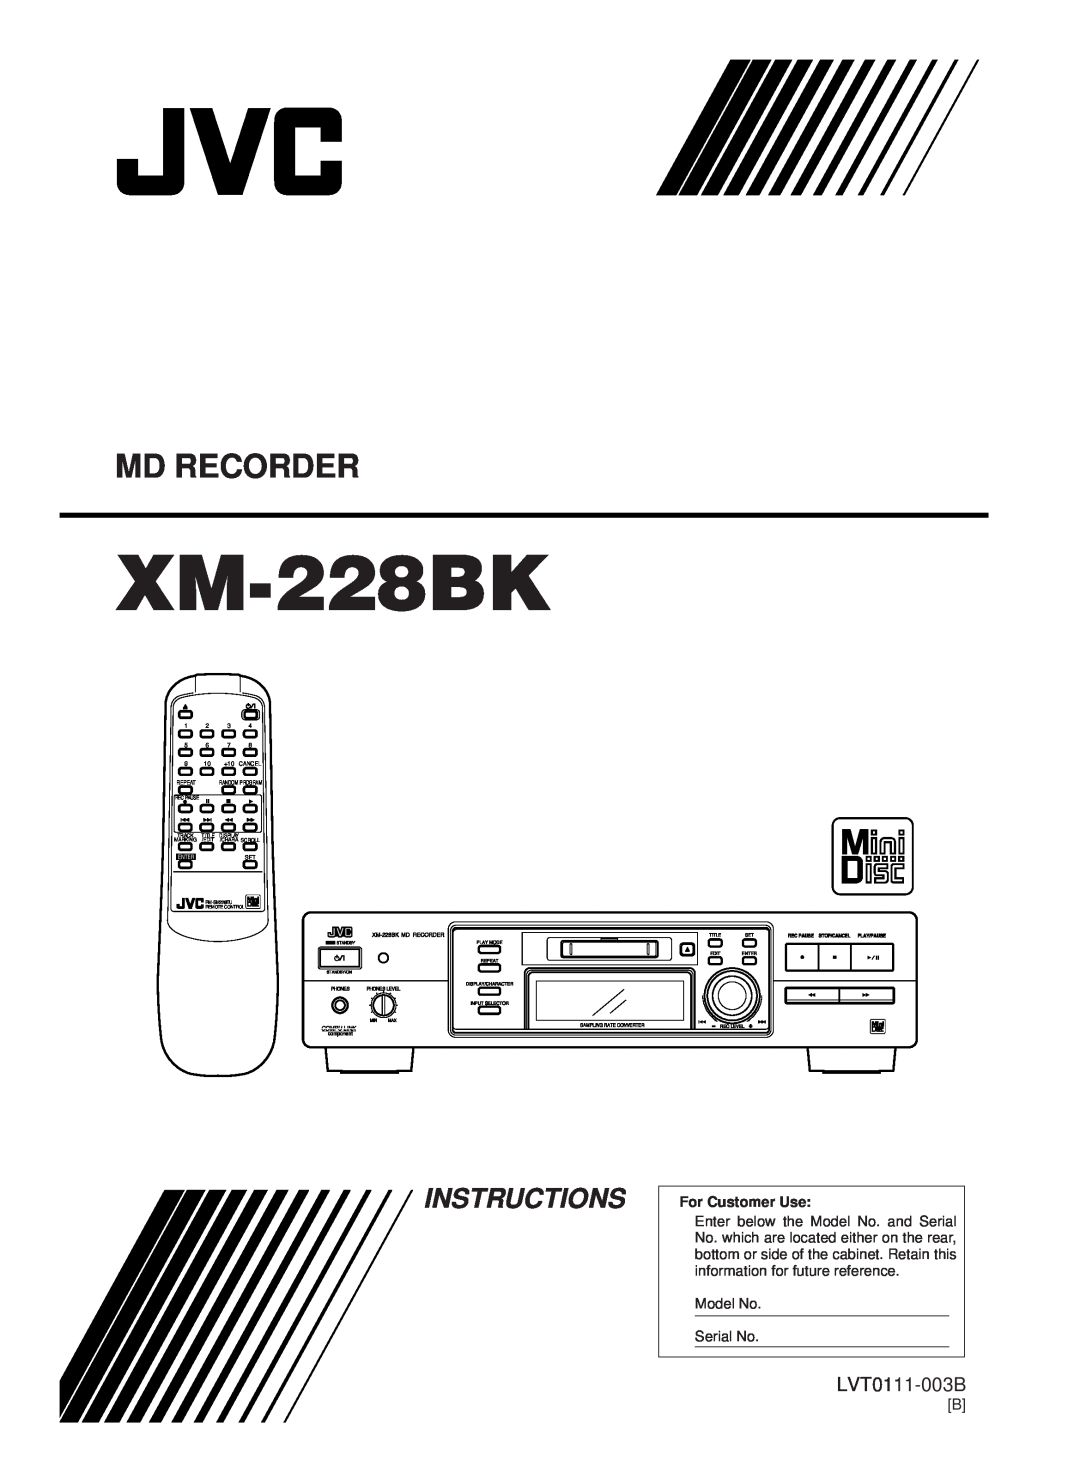 JVC XM-228BK manual Md Recorder, Instructions, LVT0111-003B, For Customer Use, Model No Serial No 